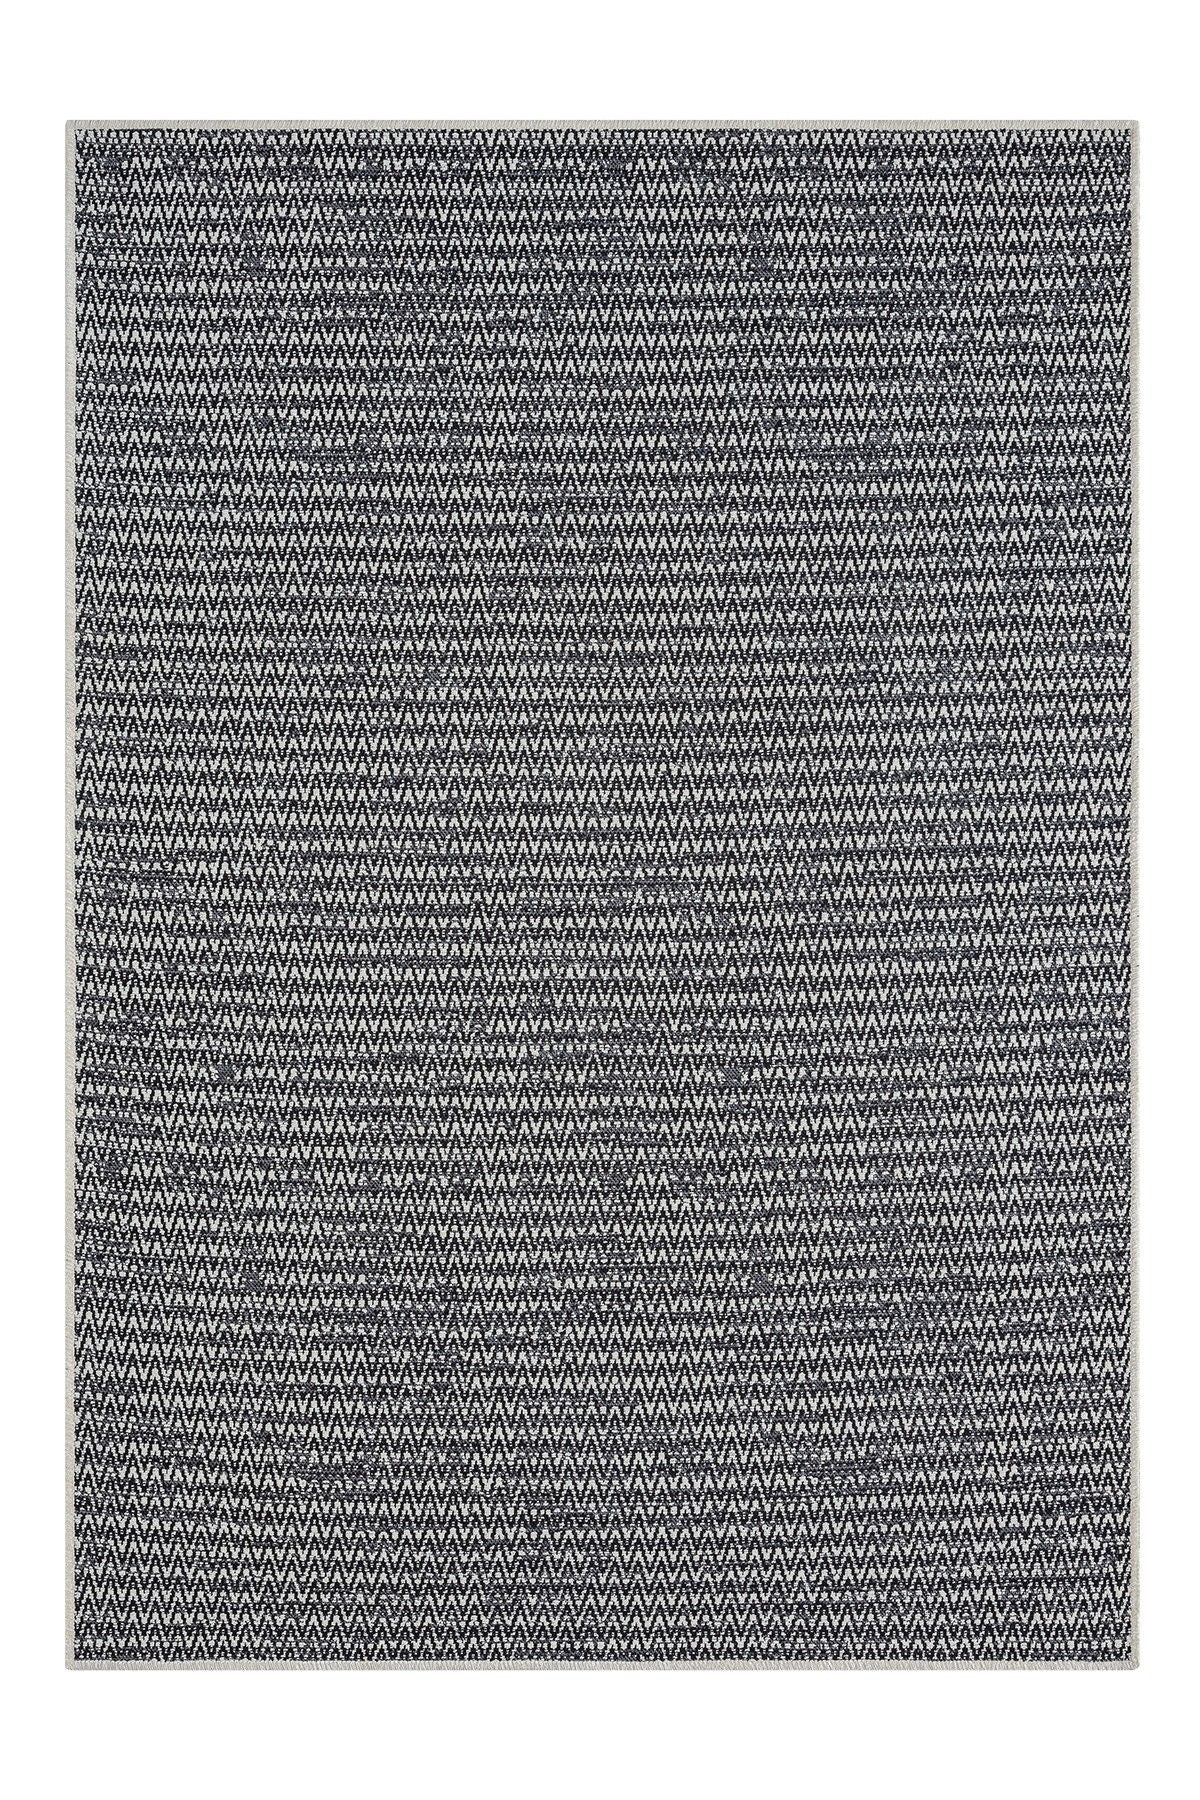 Terapia 3601 - Carpet (160 x 230)